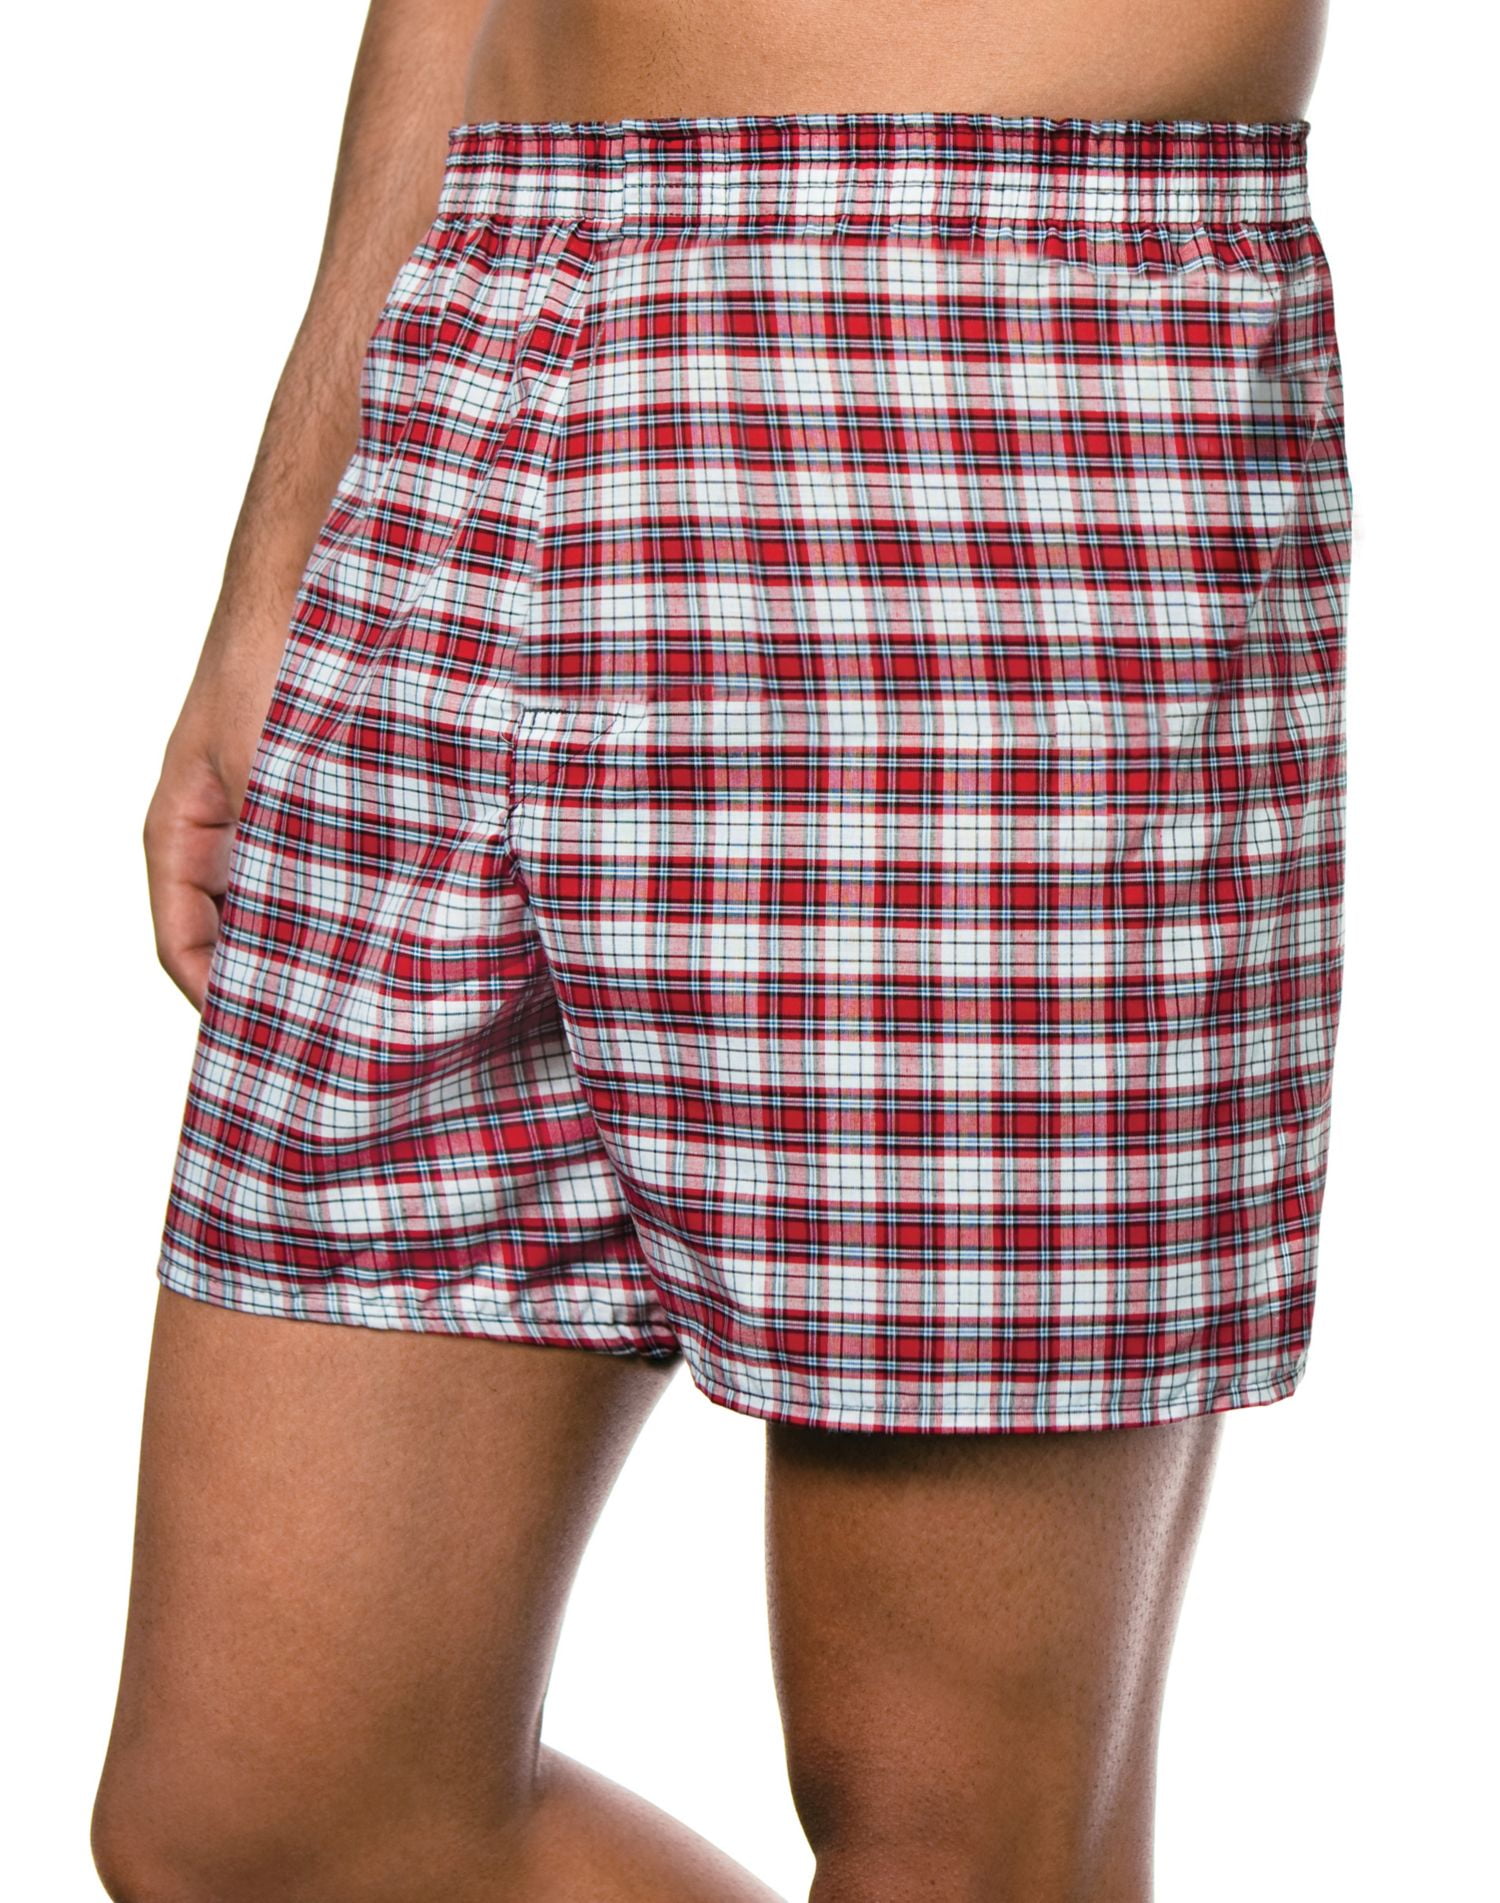 Details about   vintage hanes plaid boxer shorts underwear mens size XL deadstock NWT 1998 NOS